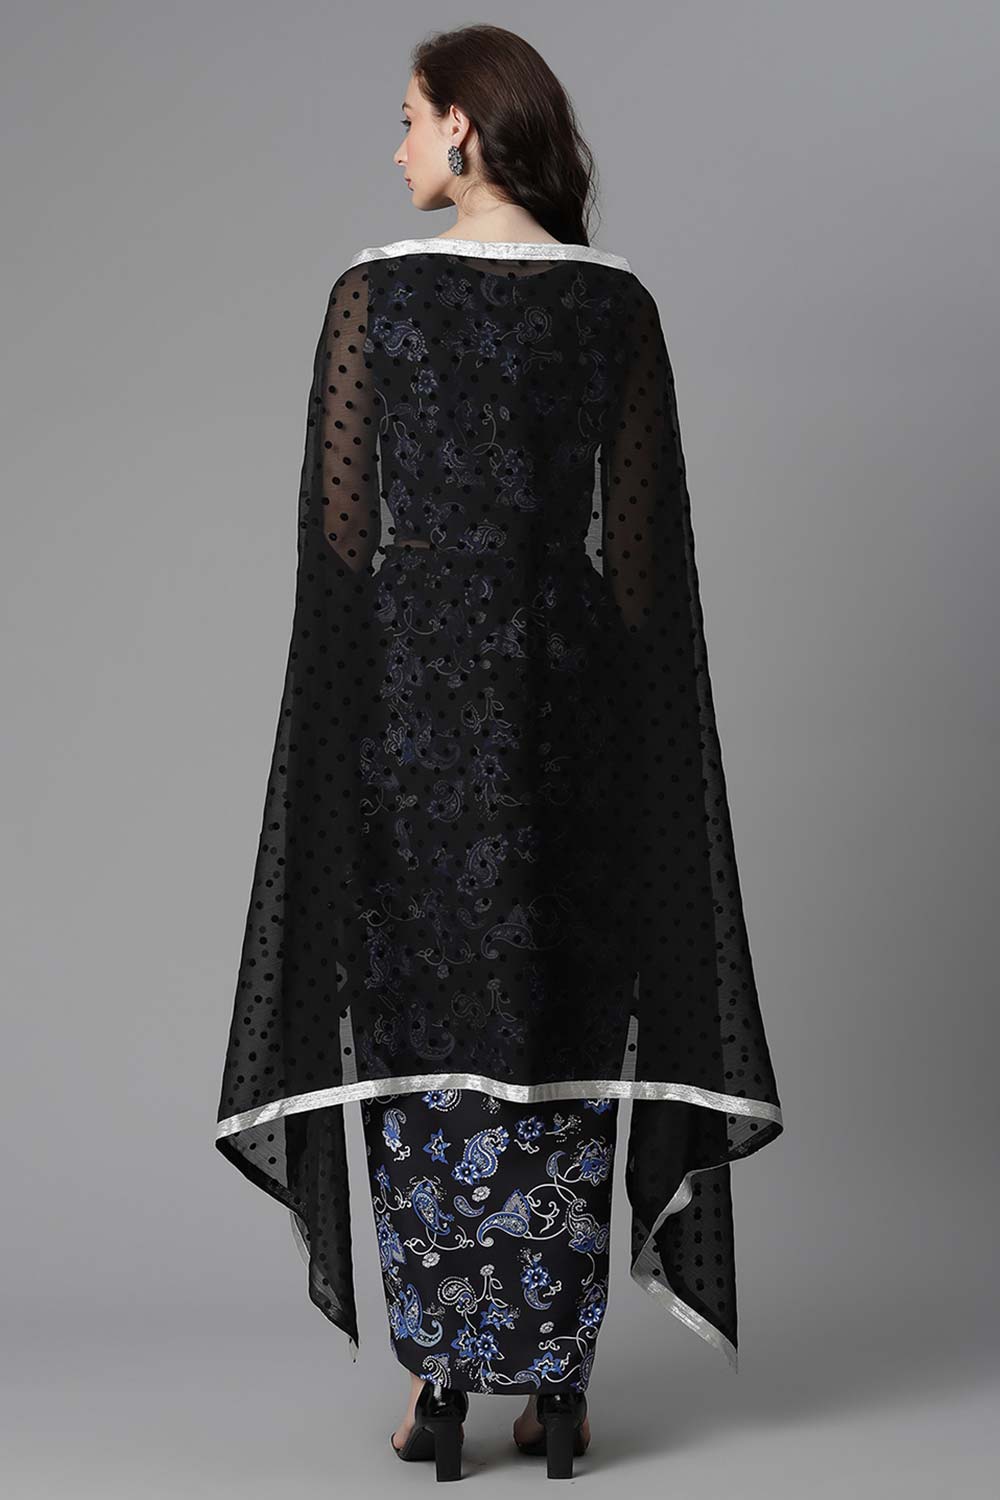 Black Crepe Digital Print Top Skirt With Shrug